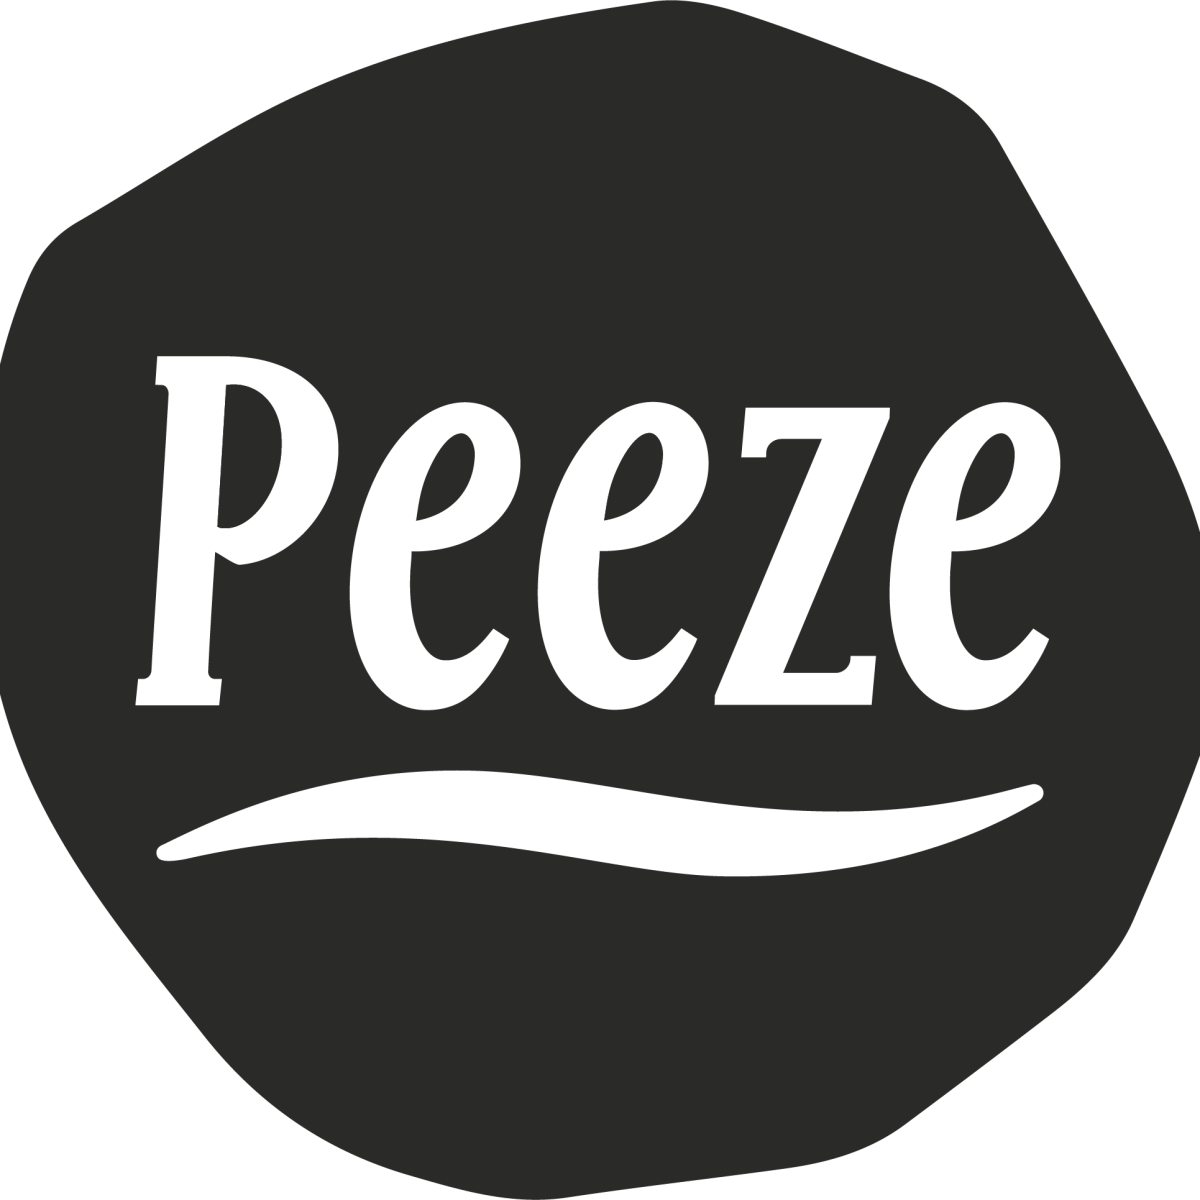 Peeze